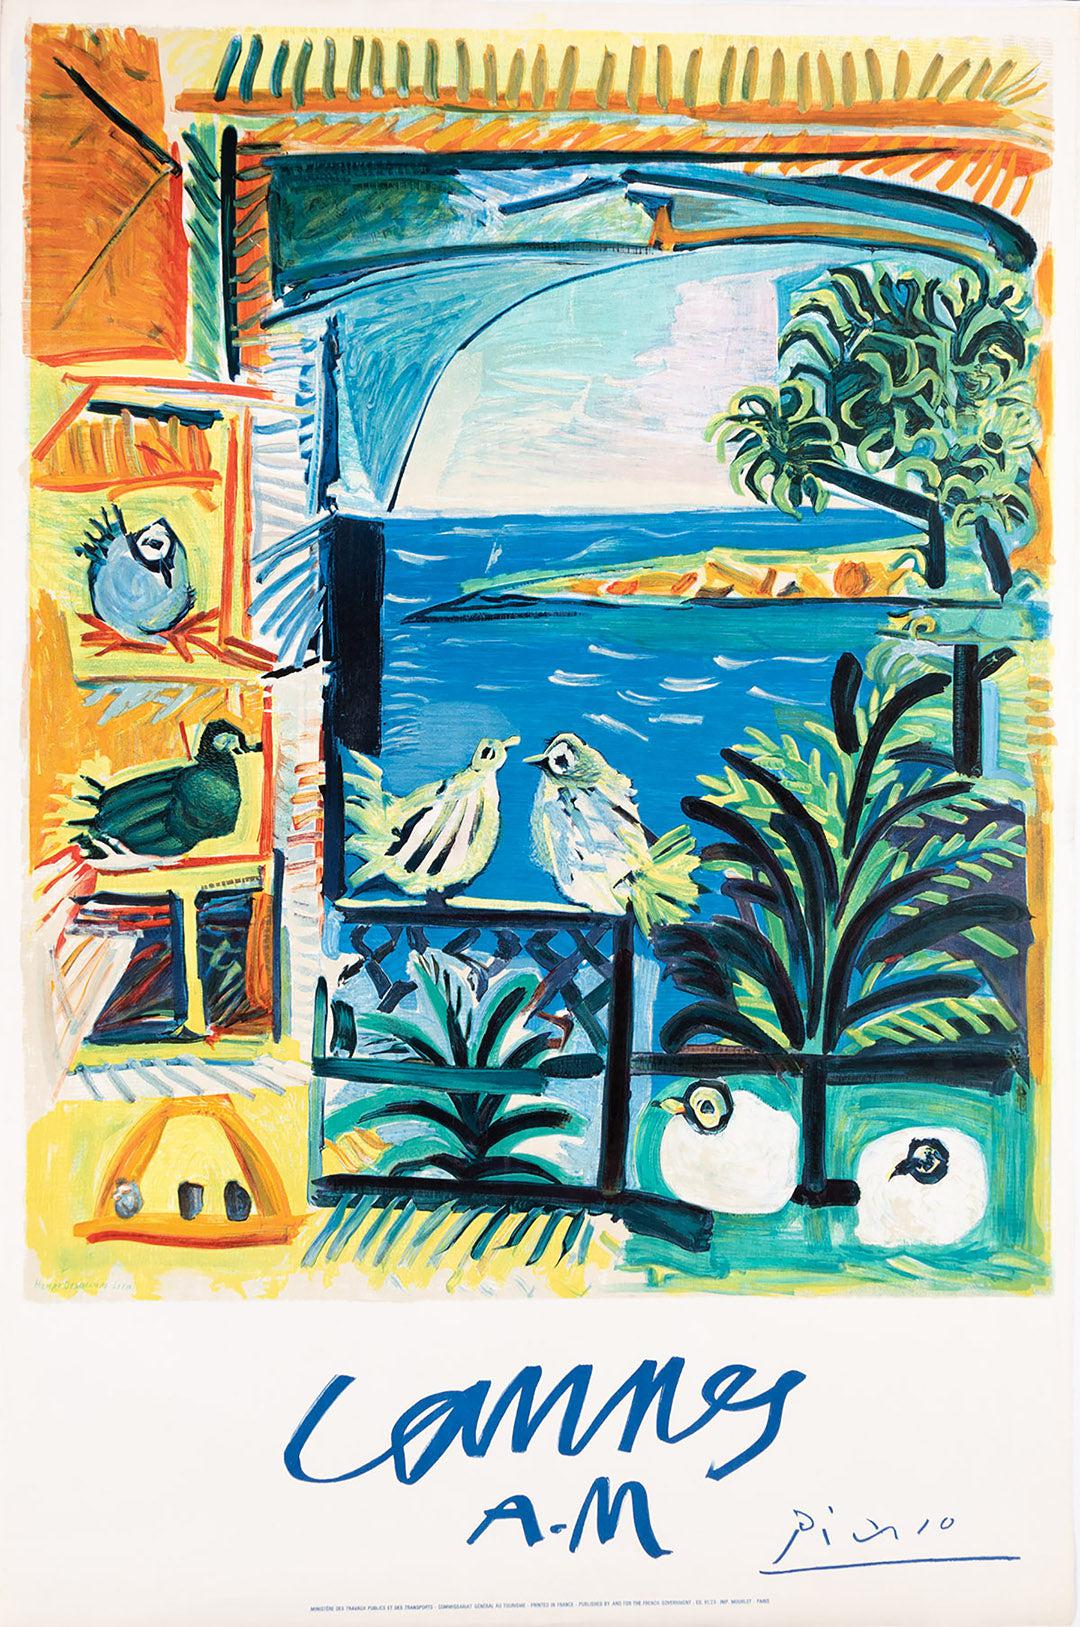 Original Vintage Cannes A.M. Pablo Picasso Poster 1961 – Ross Group